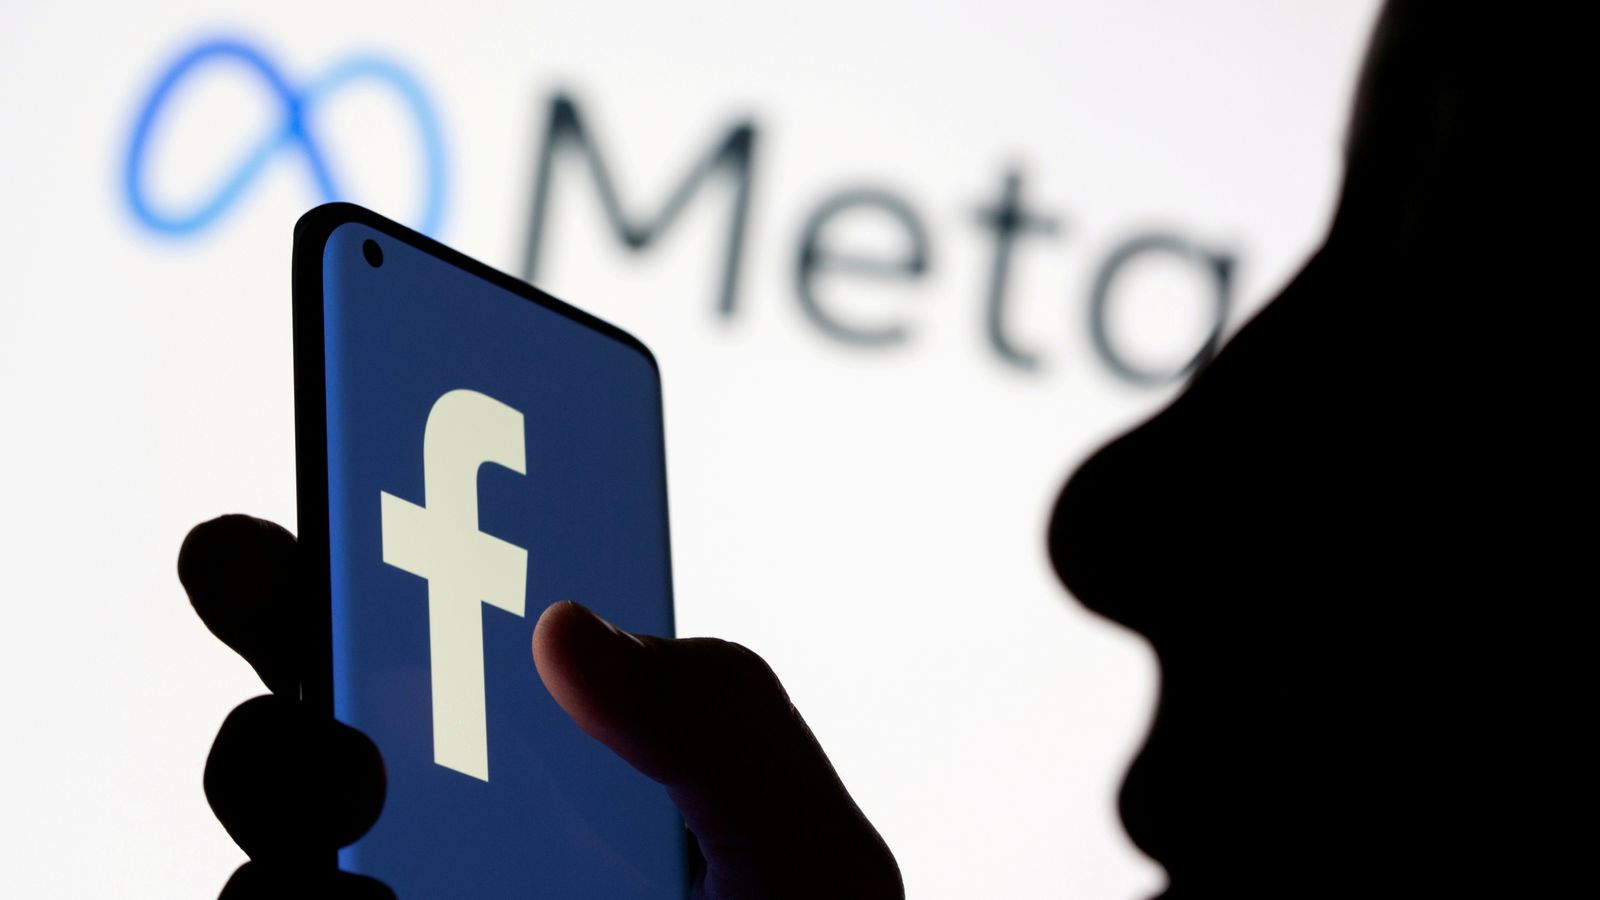 Facebook loses attempt to dismiss antitrust lawsuit demanding it sells WhatsApp and Instagram